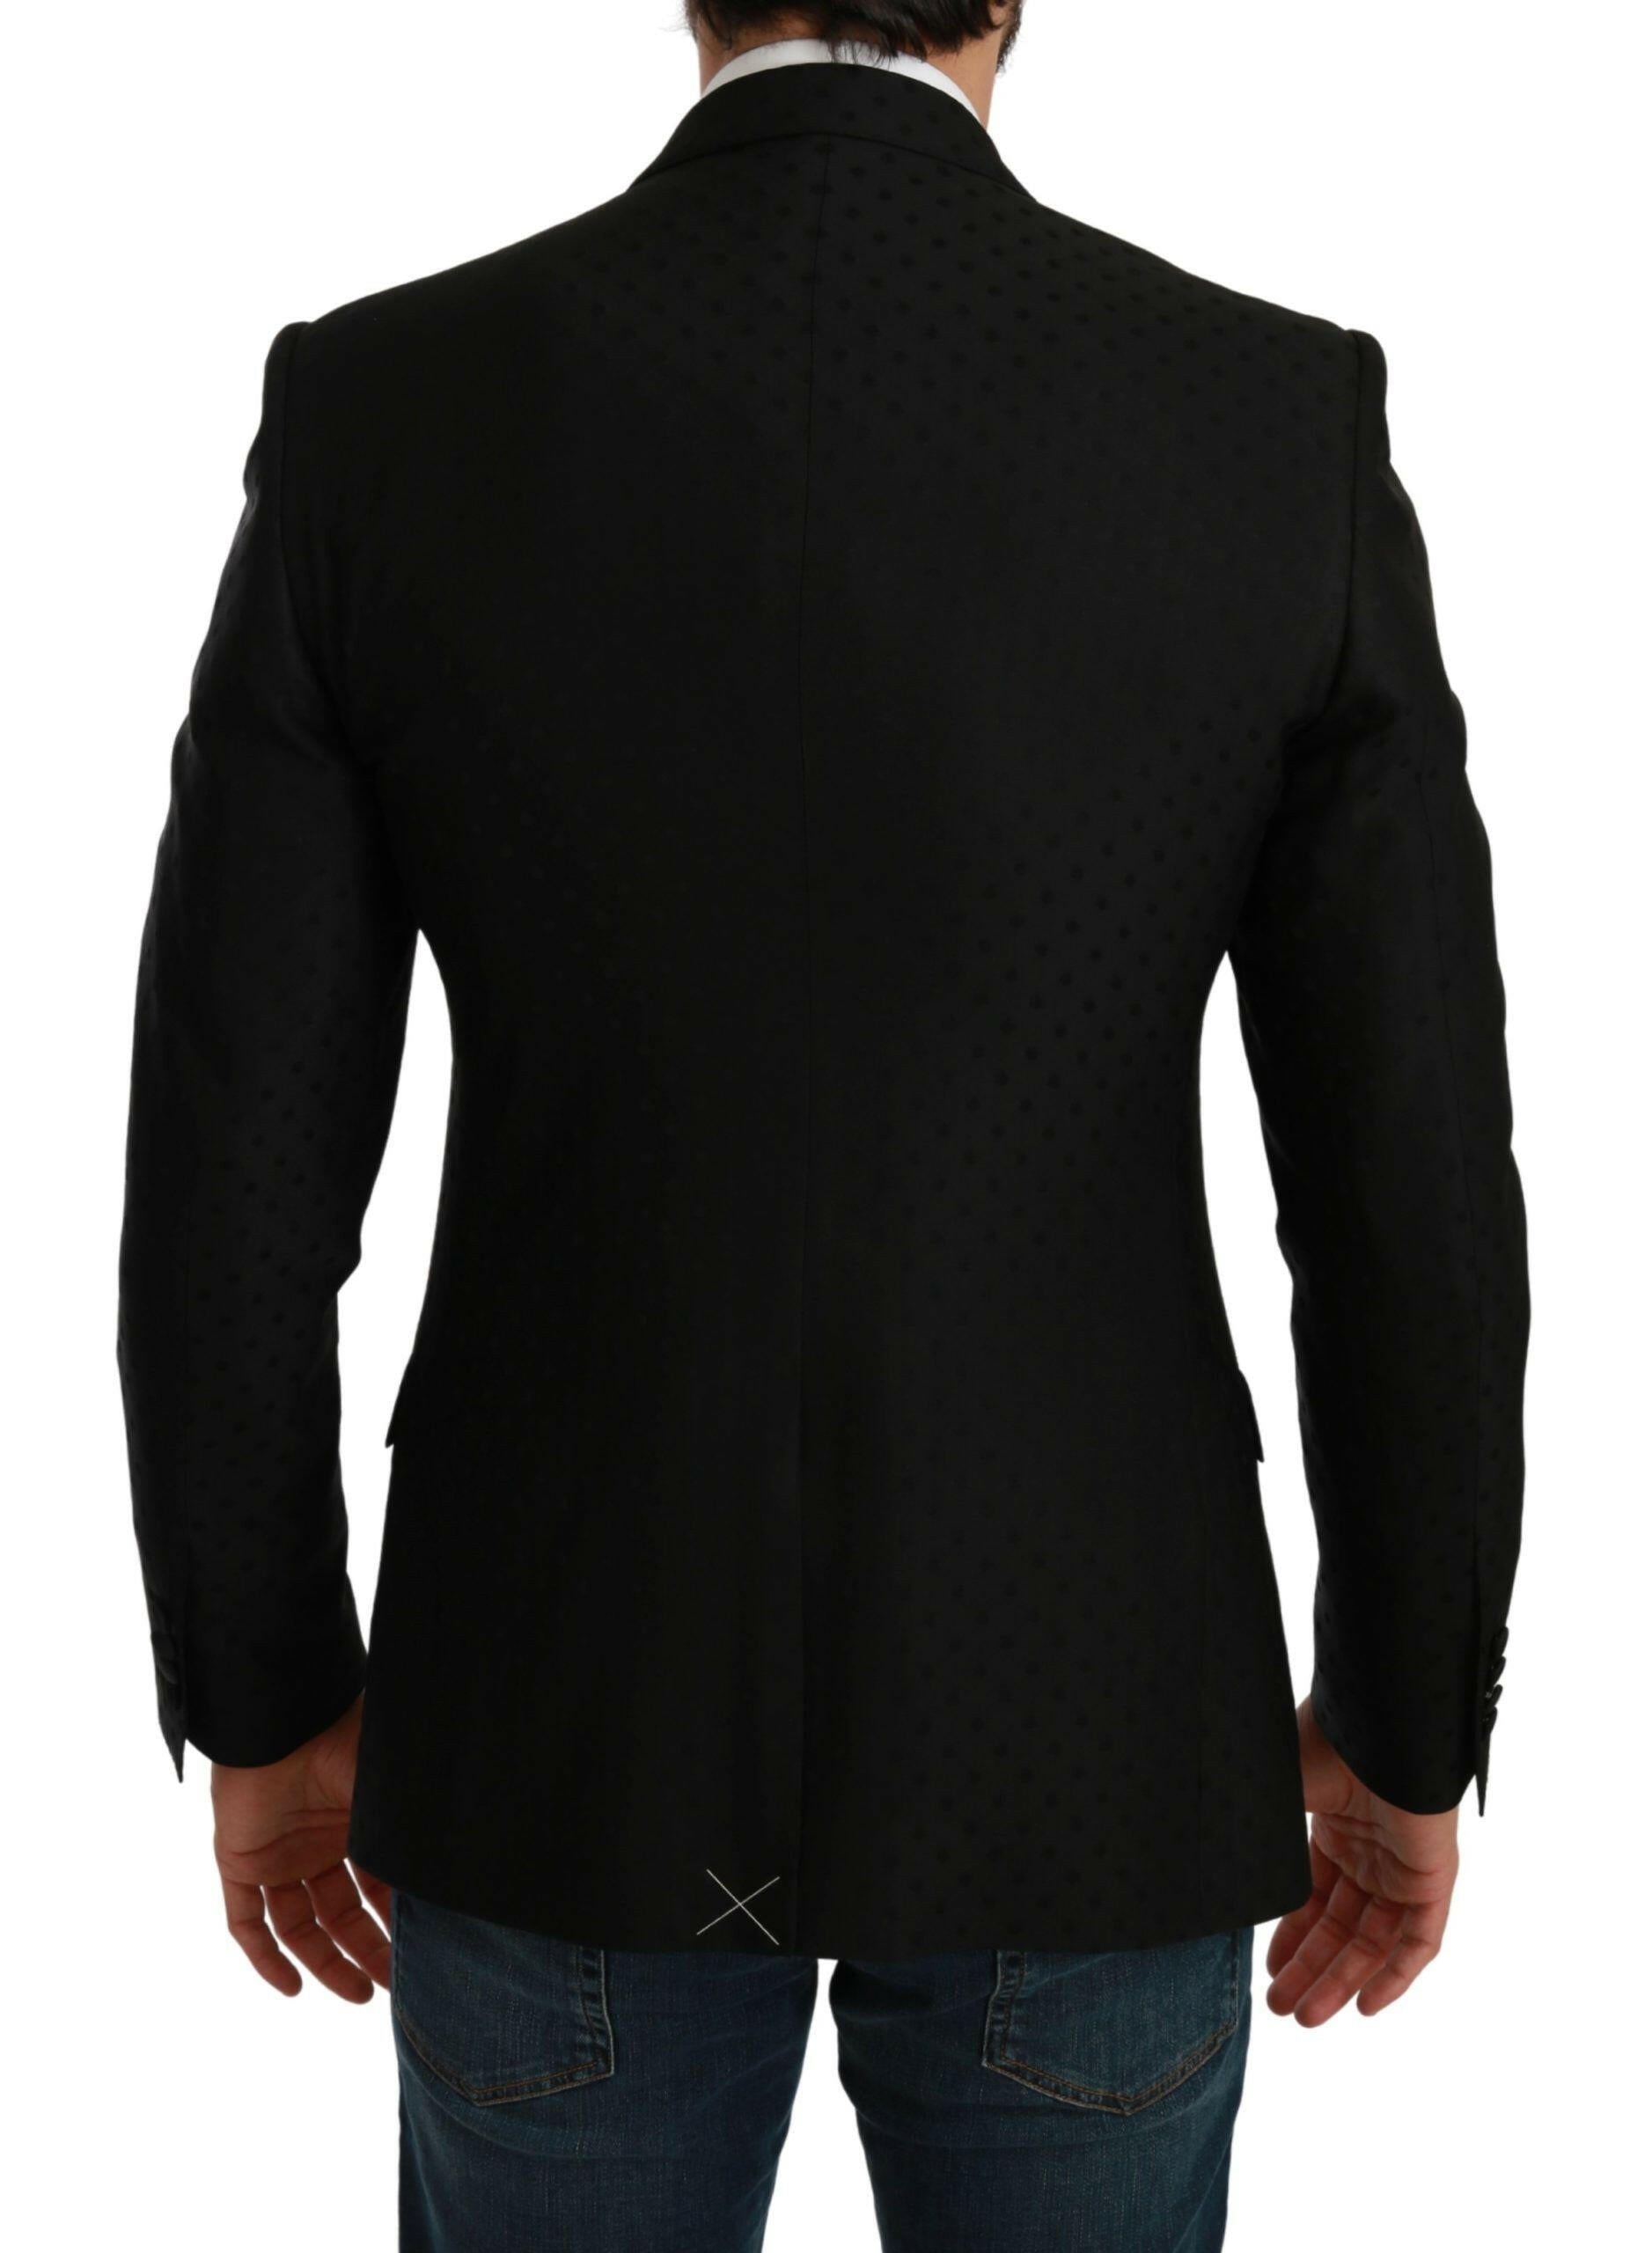 Dolce & Gabbana Black Slim Fit Coat Jacket MARTINI Blazer - GENUINE AUTHENTIC BRAND LLC  